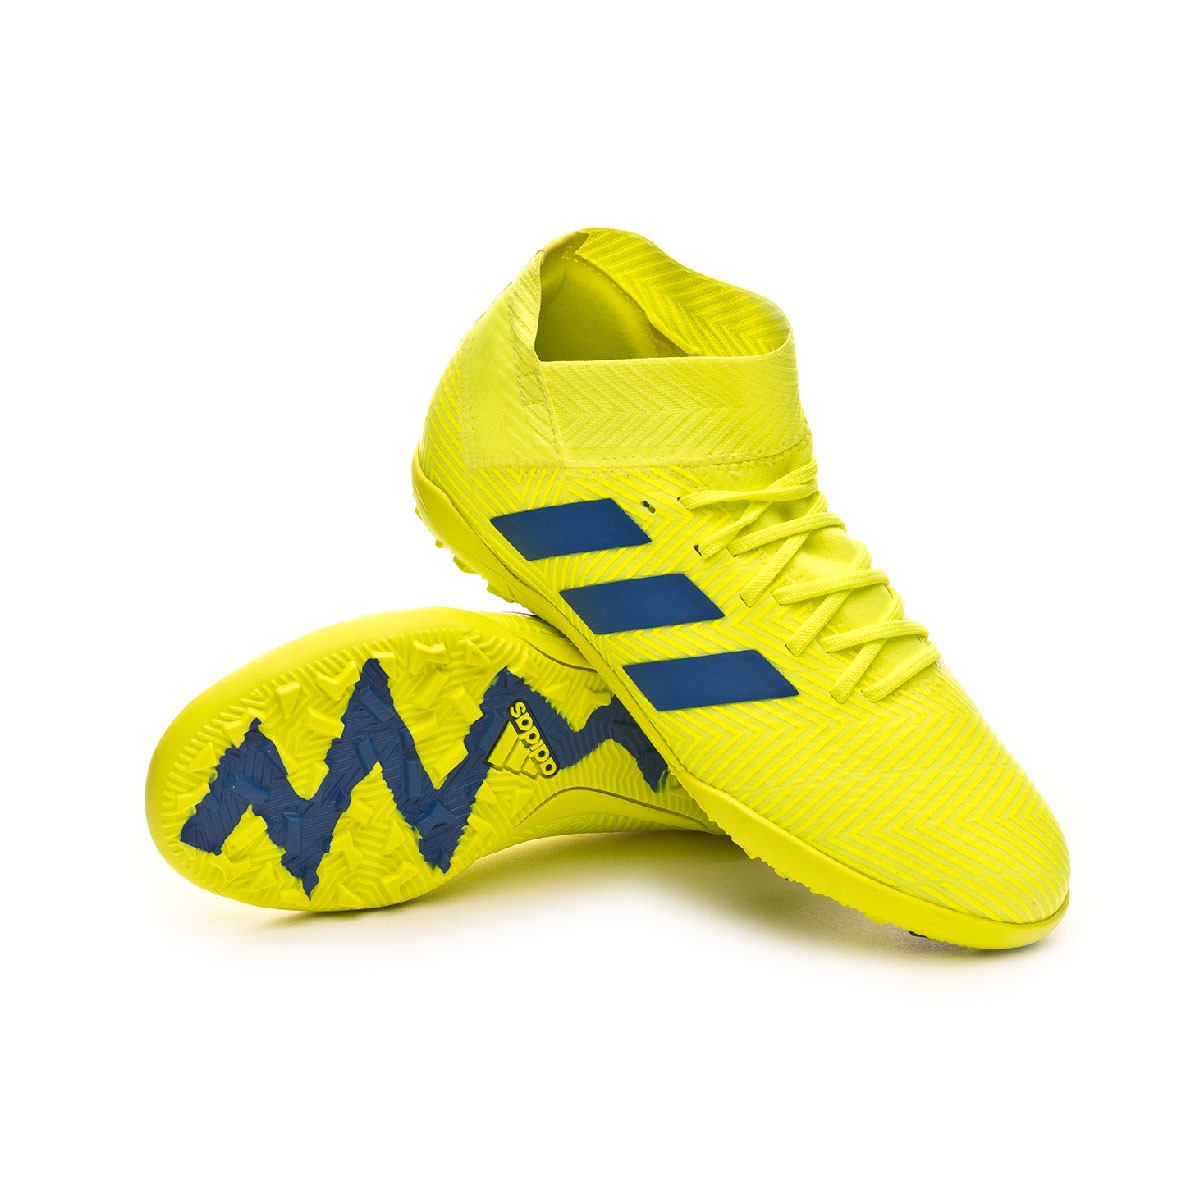 Football Boot adidas Nemeziz Tango 18.3 